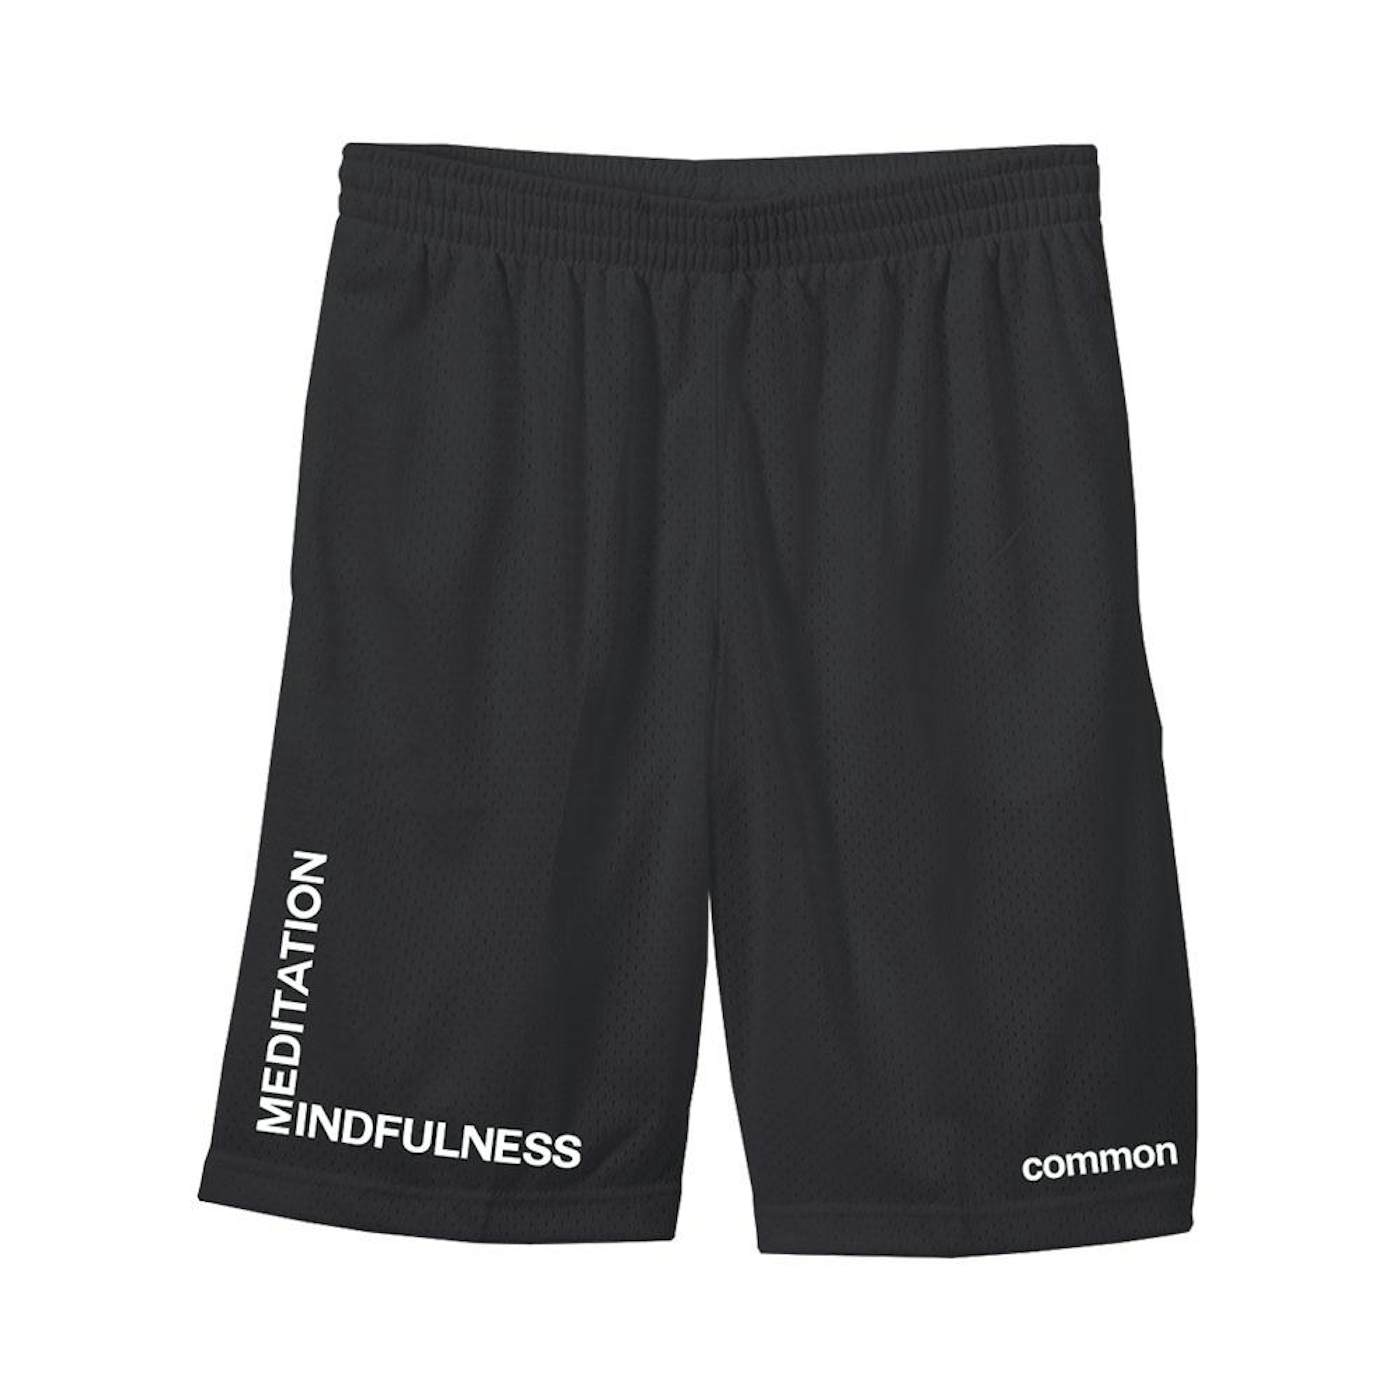 Common Basketball Shorts